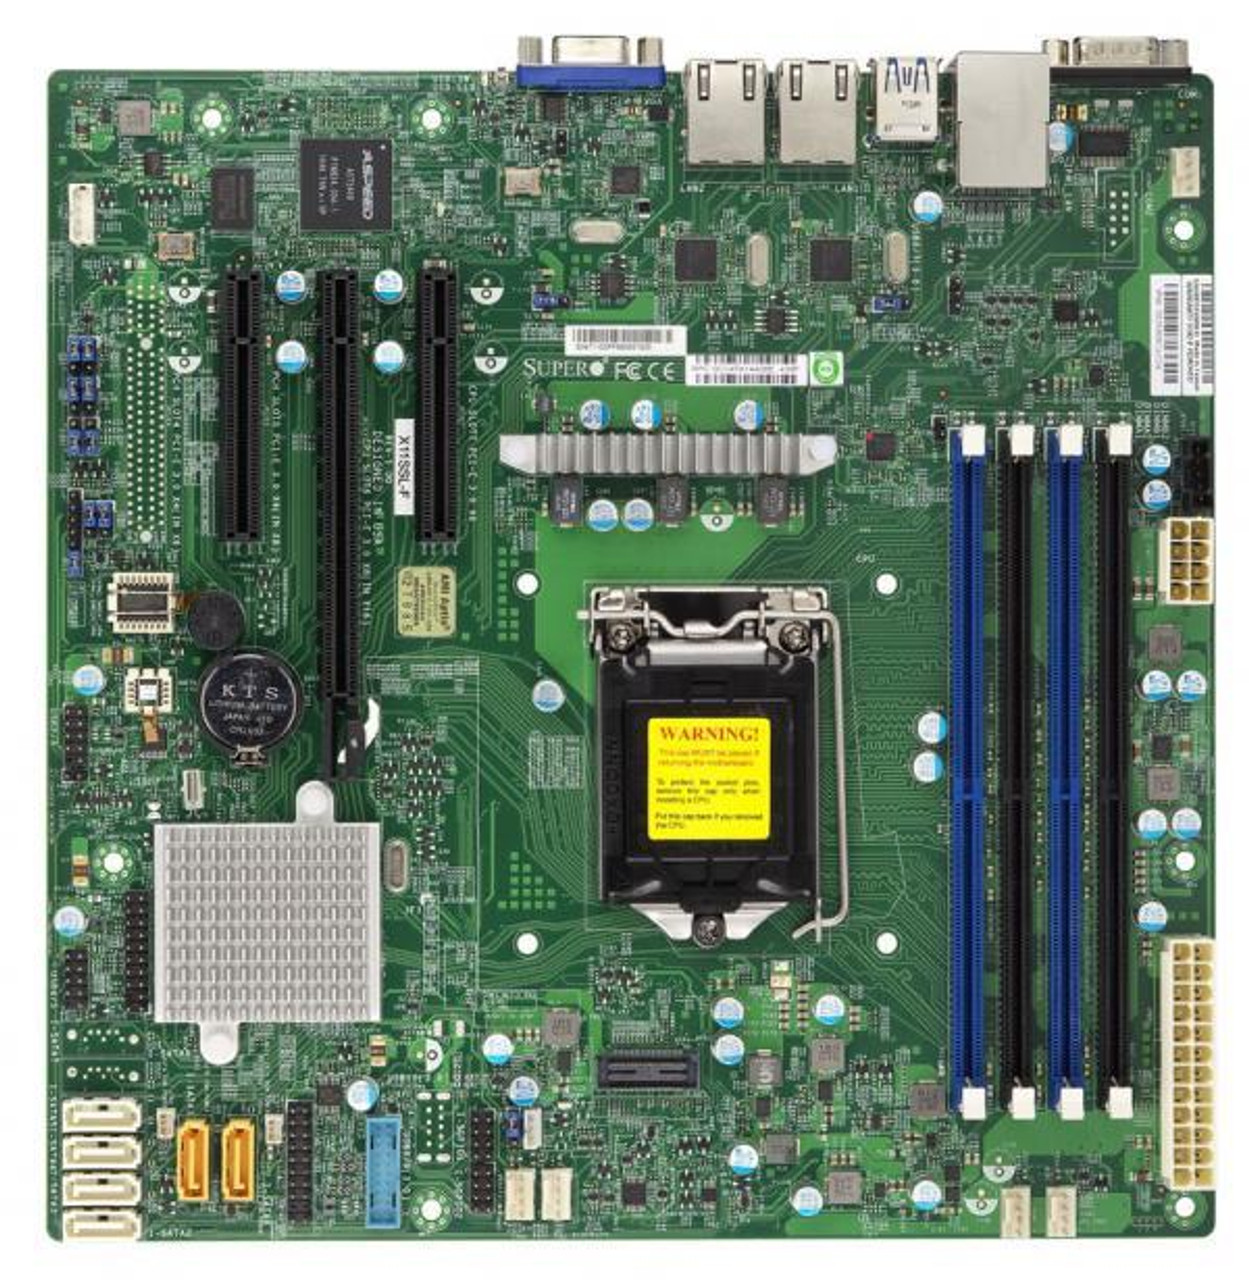 MBDX11SSLO SuperMicro X11SSL Socket H4 LGA 1151 Xeon E3-1200 v5 / v6 Intel C232 Chipset DDR4 4 x DIMM 6 x SATA 6Gbps micro-ATX Server Motherboard (Refurbished)